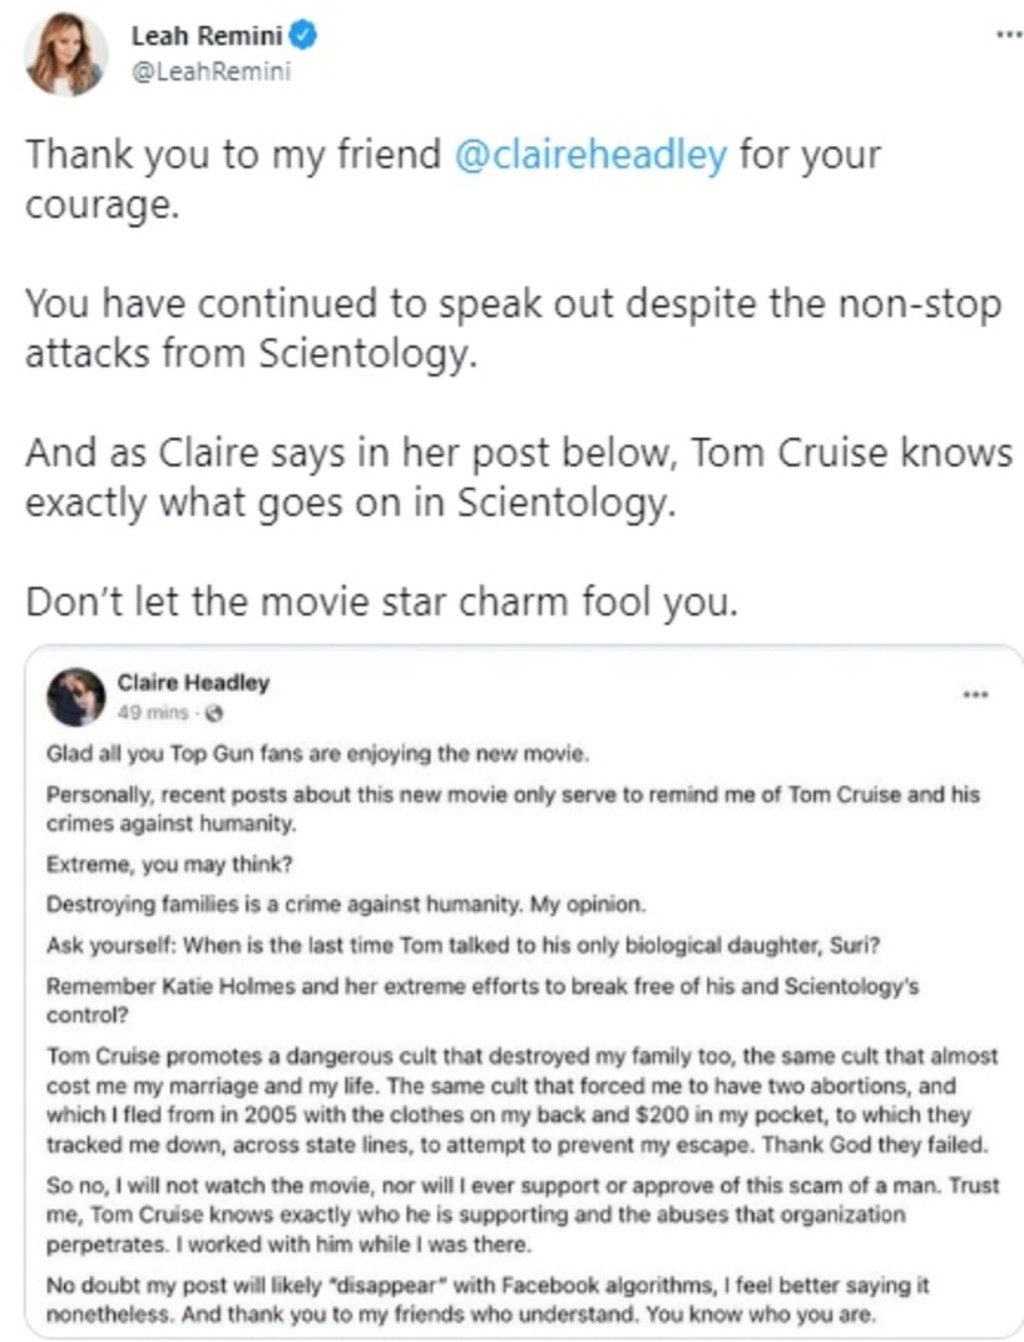 Leah轉貼前科學教派信徒Claire Headley的社交網帖文，指摘湯告魯斯宣揚邪教。